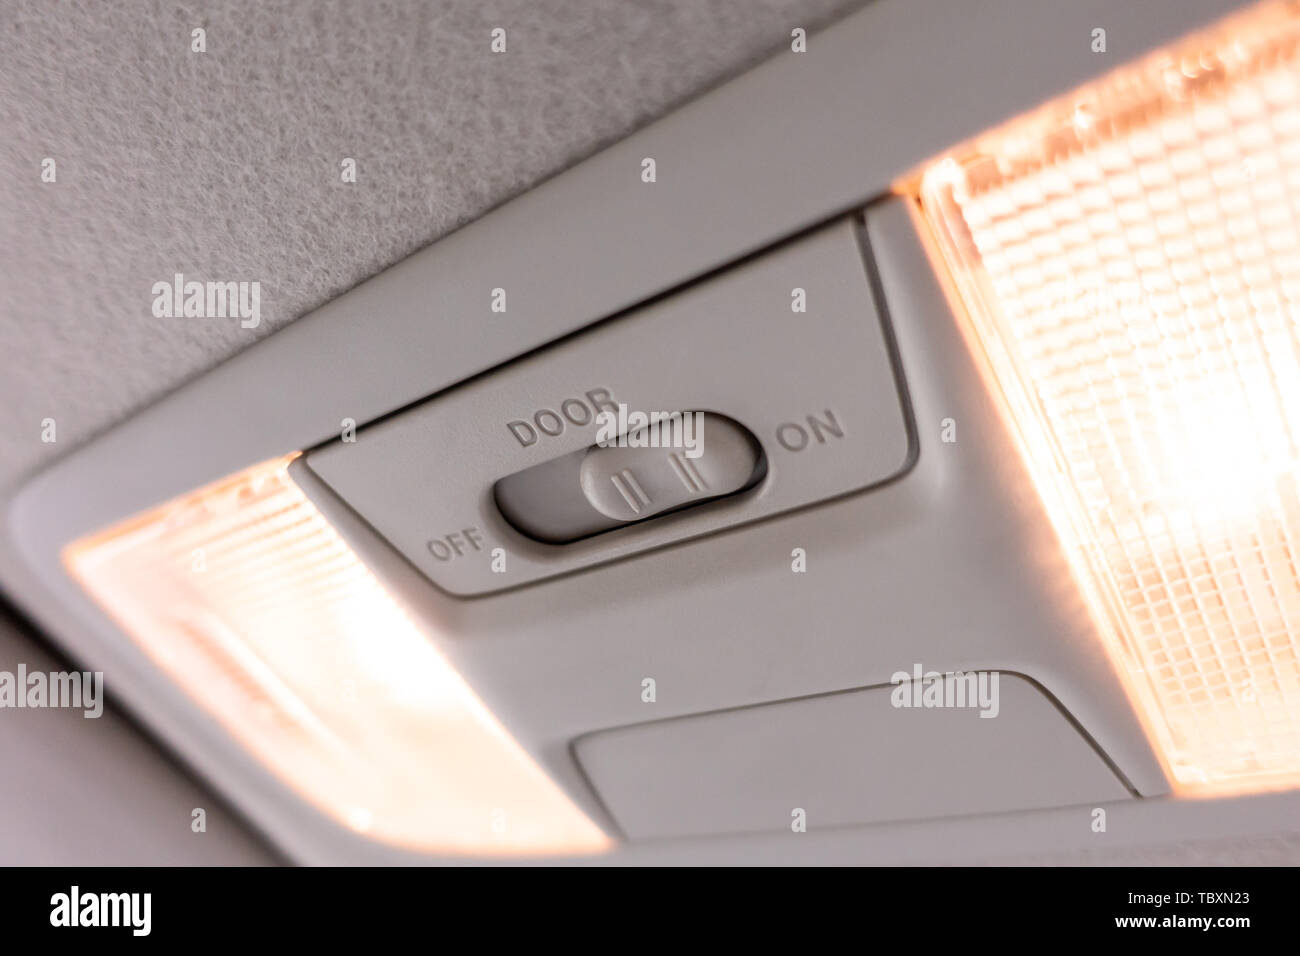 Car lighting switch for interior light bulb Stock Photo - Alamy